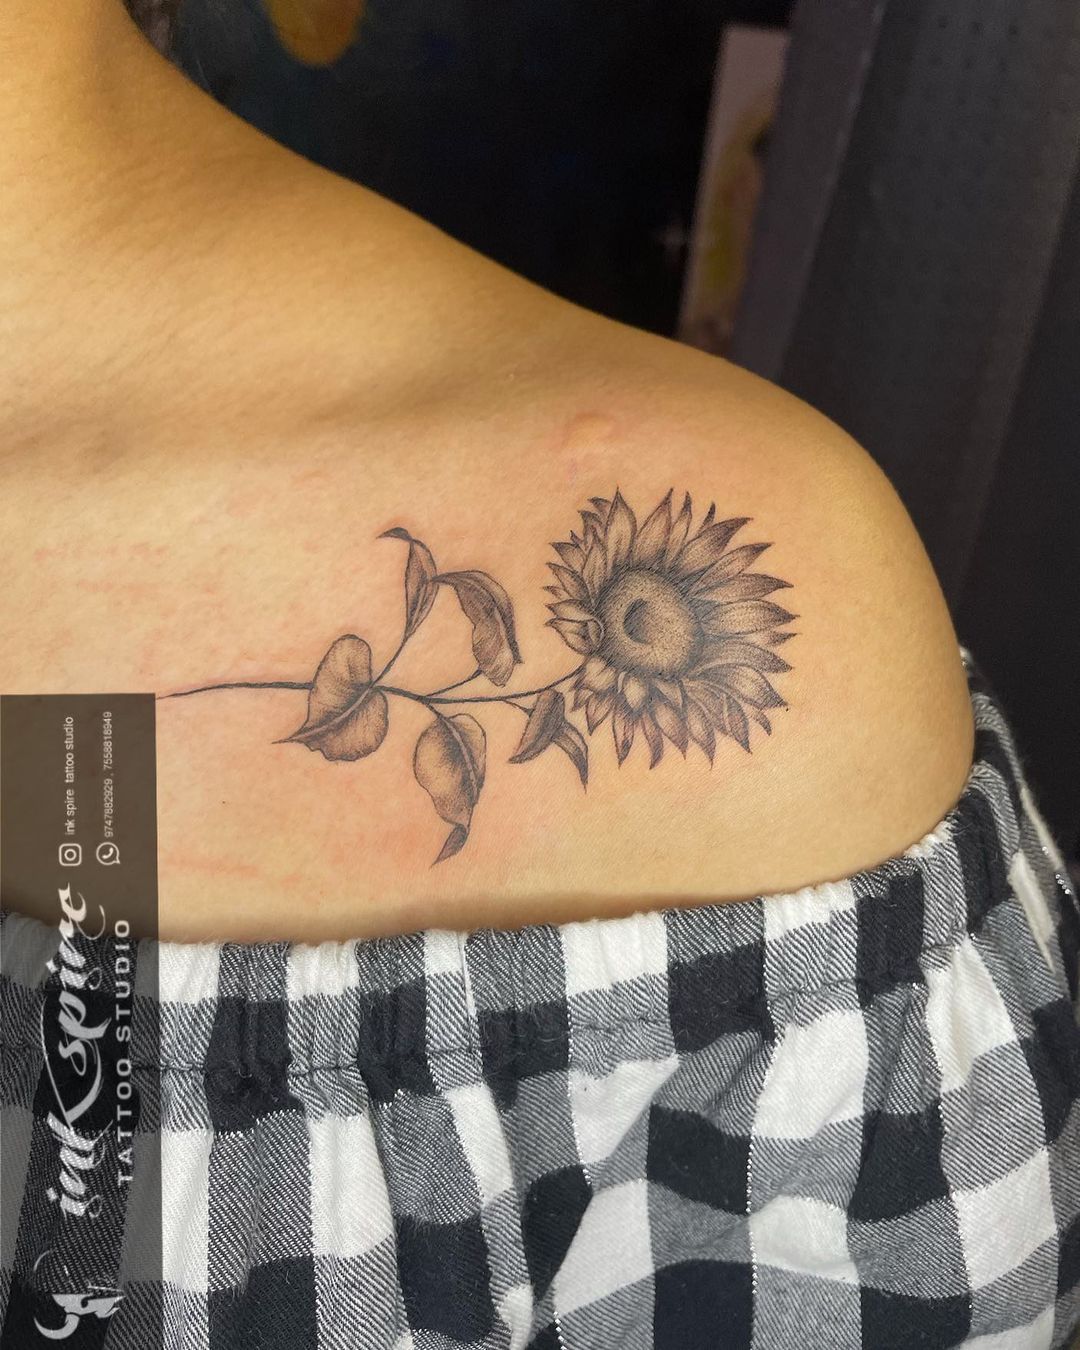 Sunflower shoulder tattoo by welcometoreality on DeviantArt